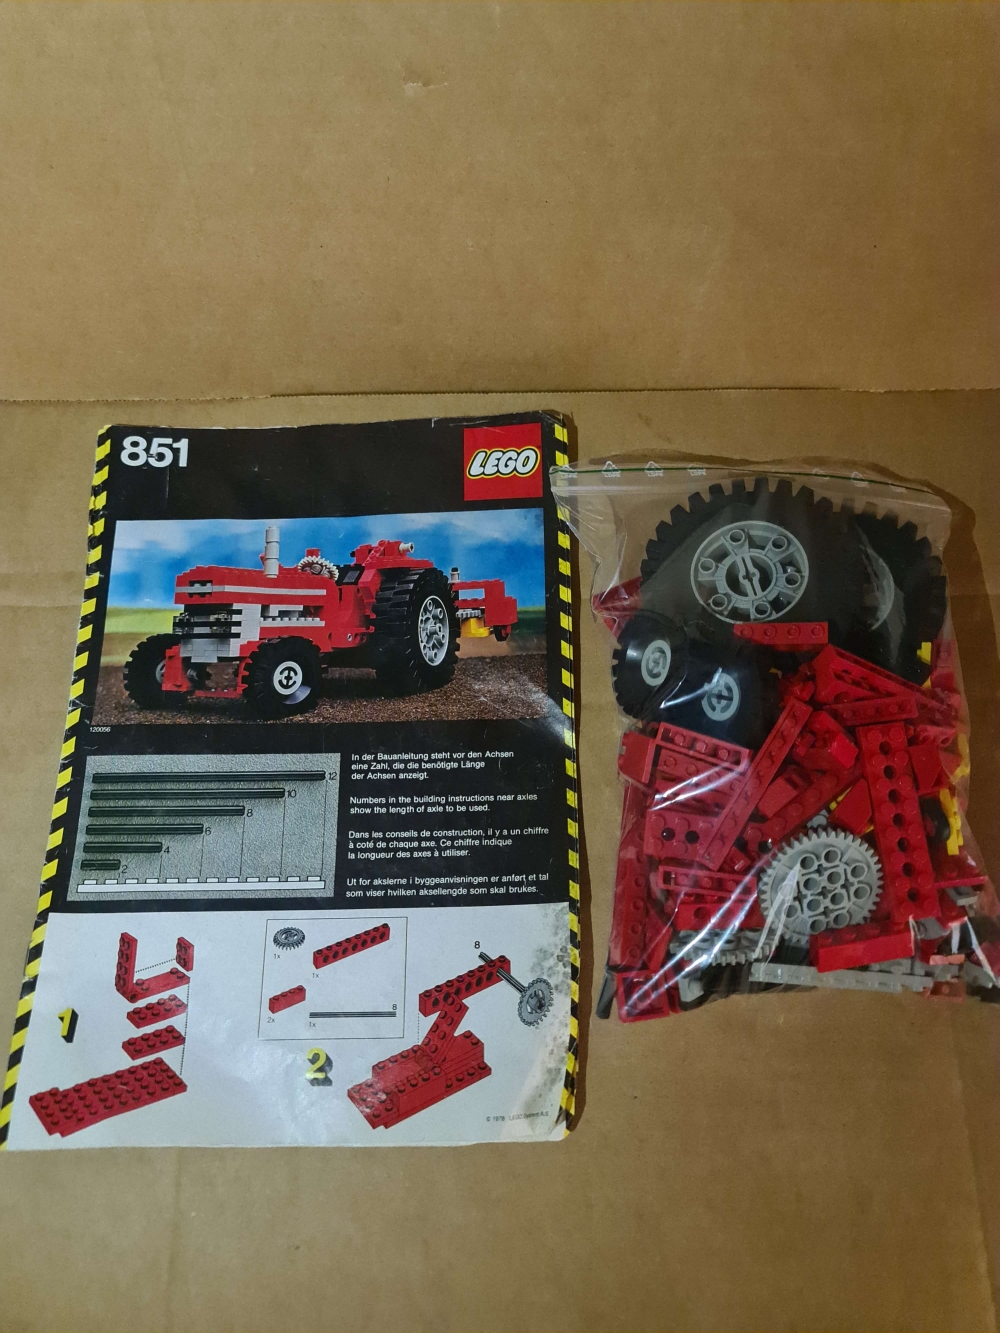 Sett 851 fra Lego Technic serien.
Fint sett. Komplett med manual.
